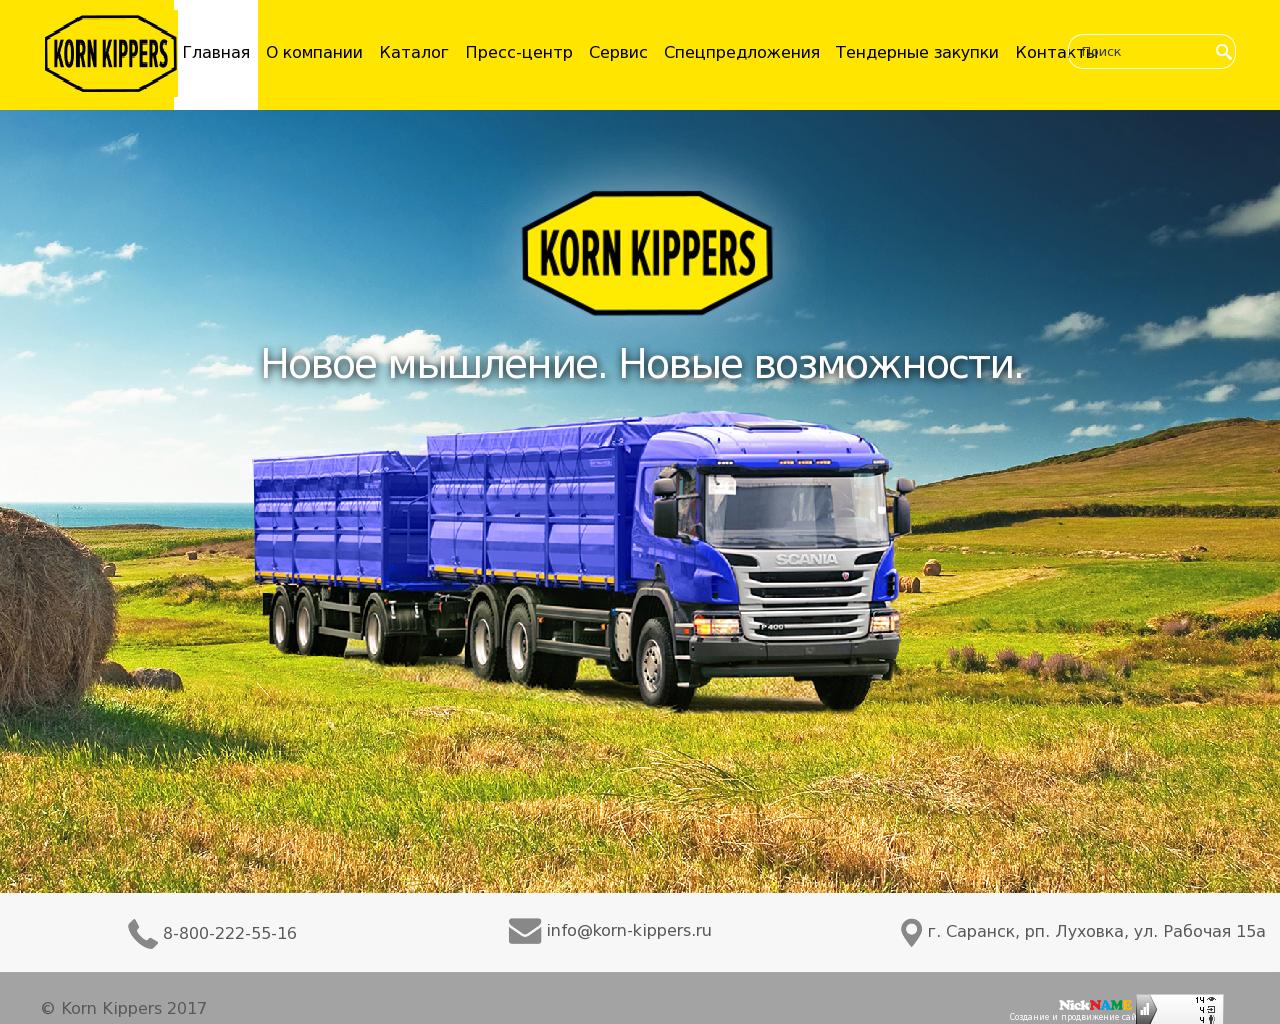 Изображение сайта korn-kippers.ru в разрешении 1280x1024